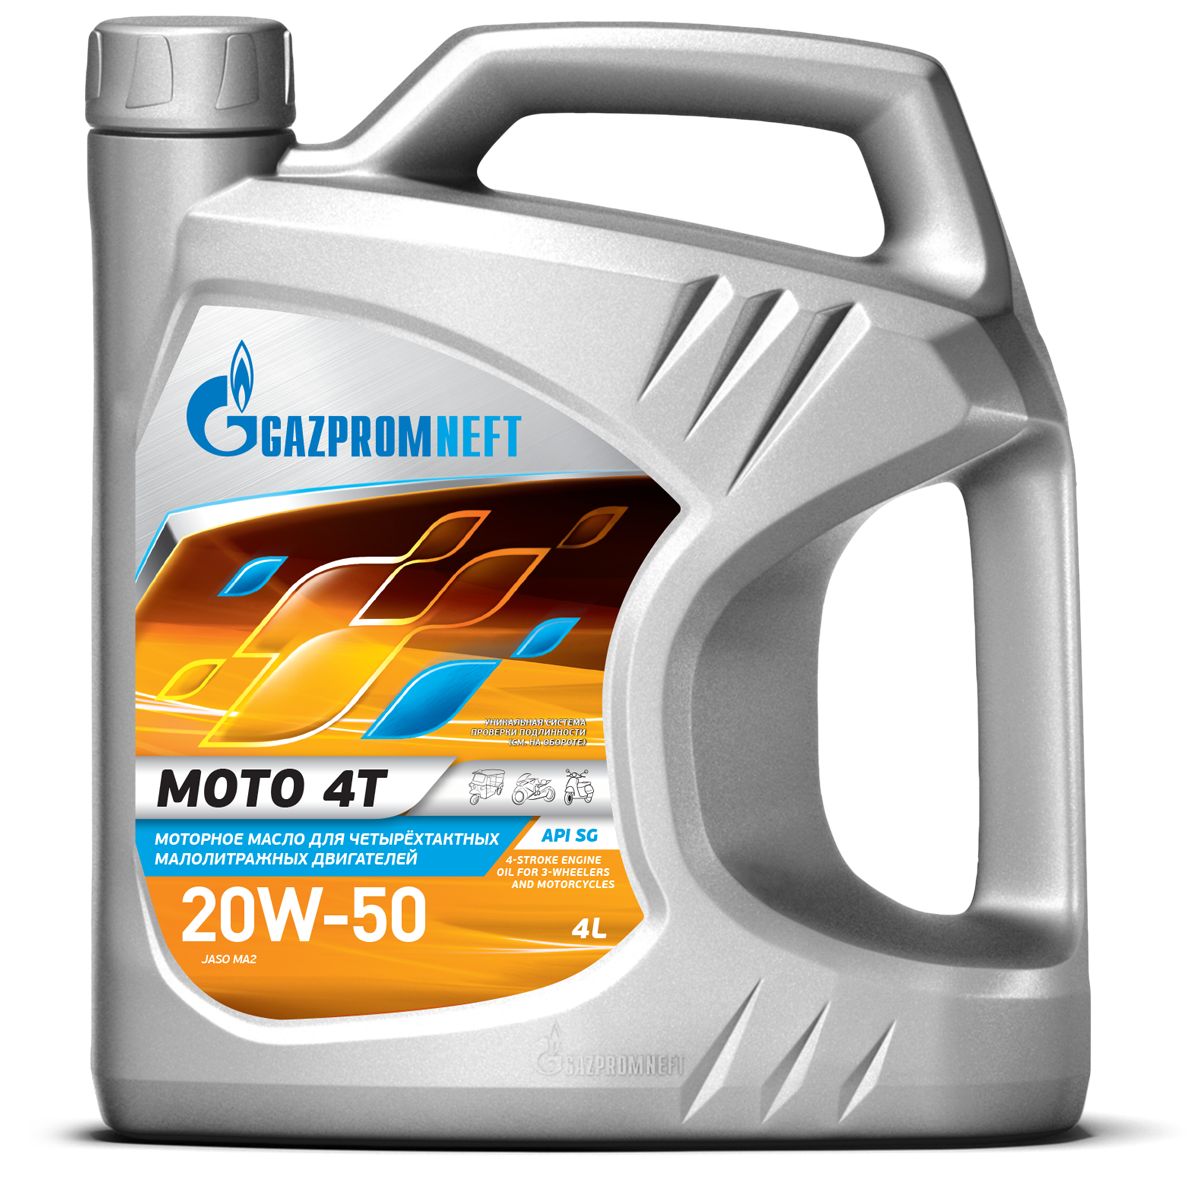 Масло моторное Gazpromneft Moto 4T 20W-50 205 л (182 кг) Завод Гаспрома: МЗСМ